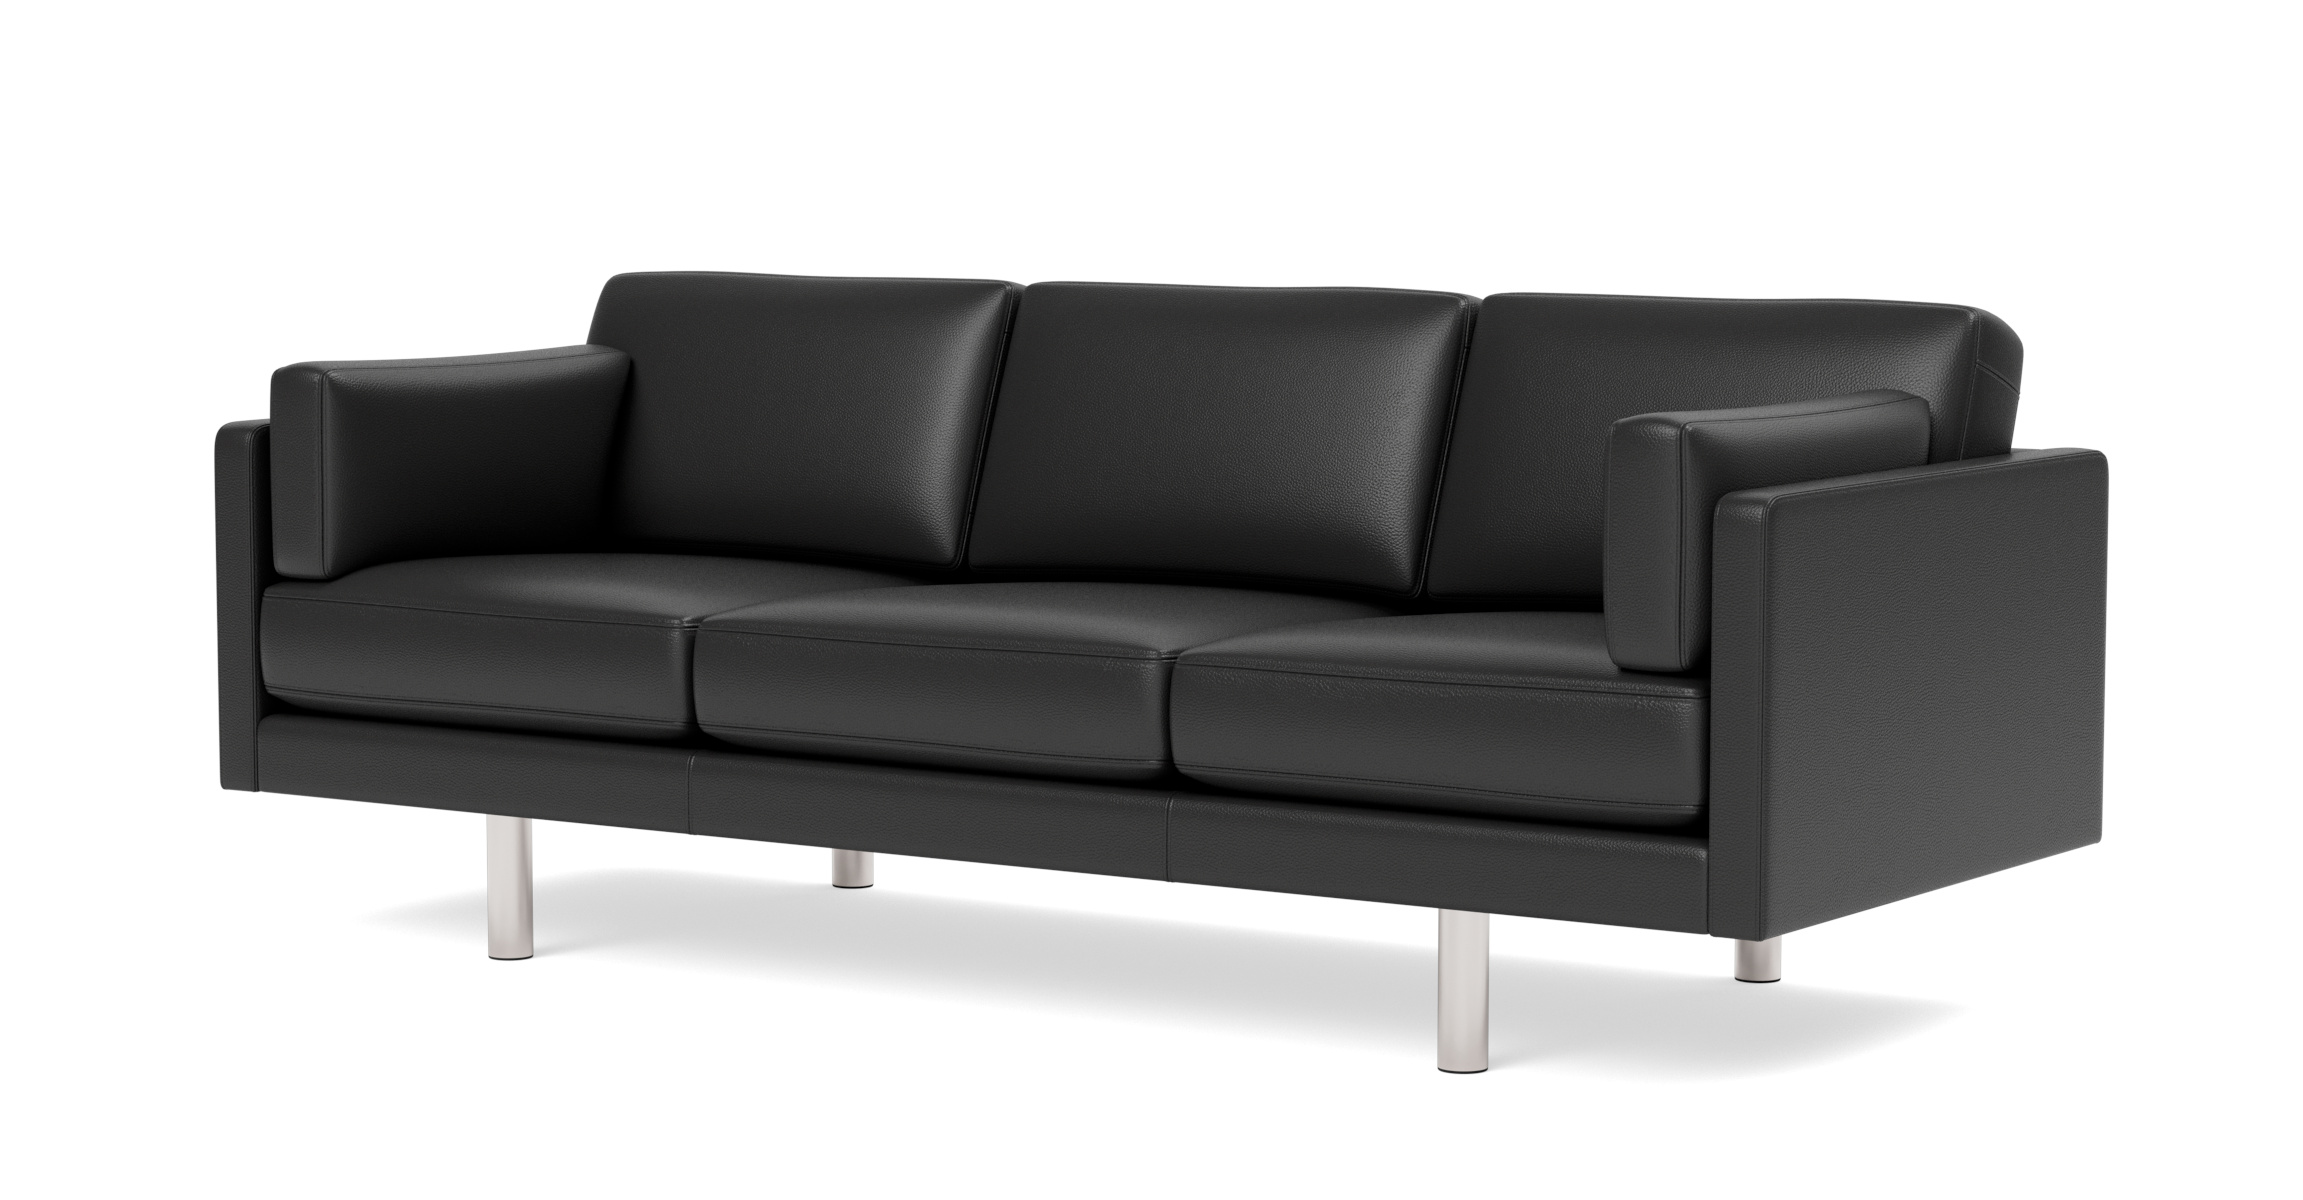 EJ220 Sofa 3-Sitzer, eiche geseift / erik, 9998 broken grey